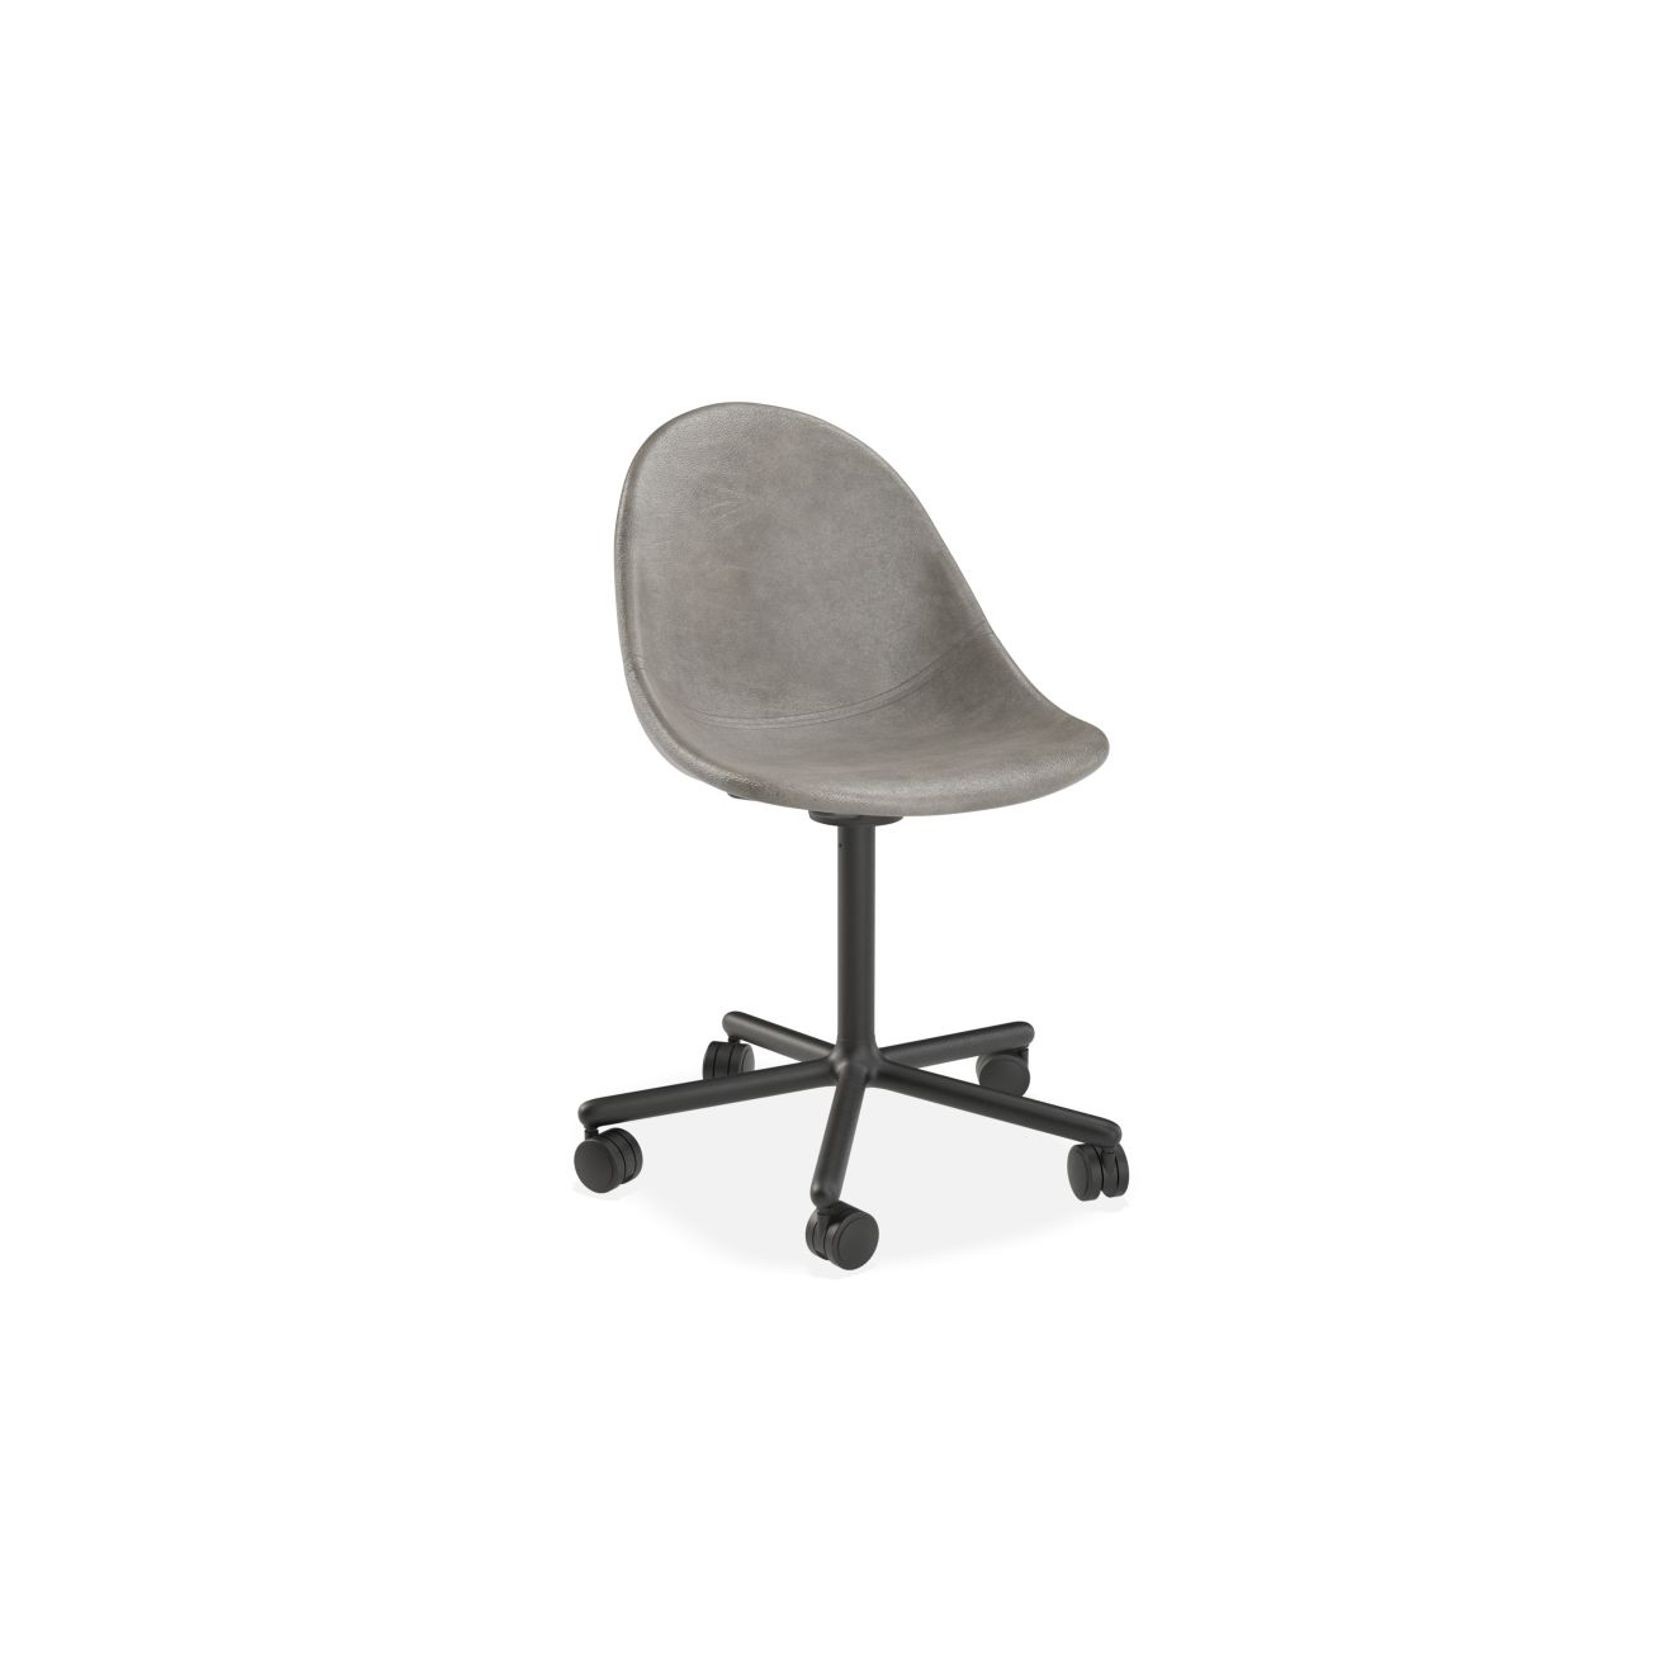 Pebble Chair Grey Upholstered Vintage Seat - Sled Base - Black gallery detail image